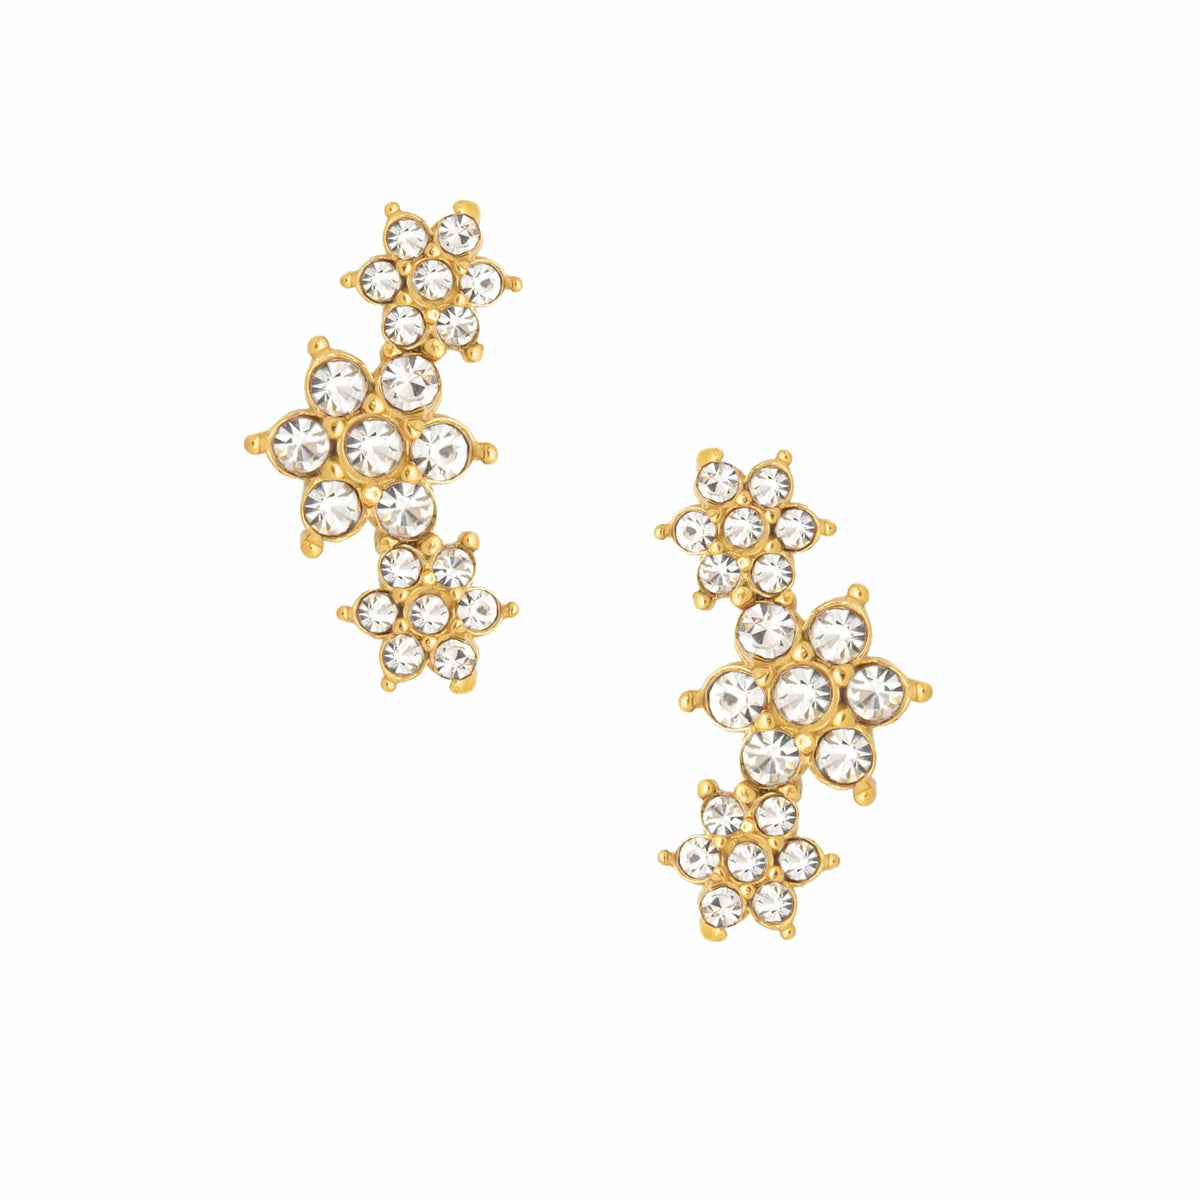 BohoMoon Stainless Steel Blossom Stud Earrings Gold